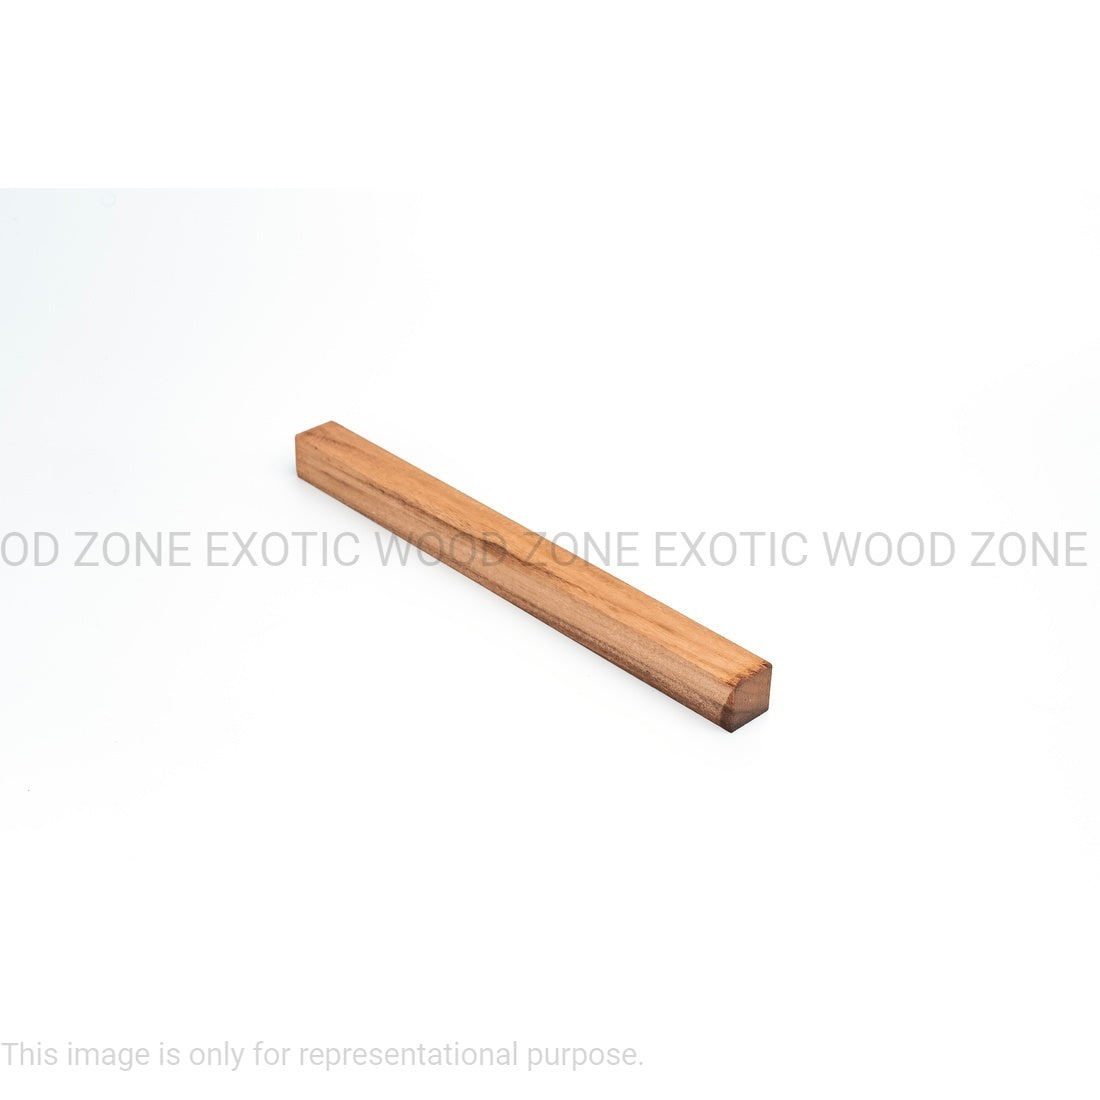 Goncalo Alves/Jobillo Hobbywood Blank 1&quot; x 1 &quot; x 12&quot; inches Exotic Wood Zone